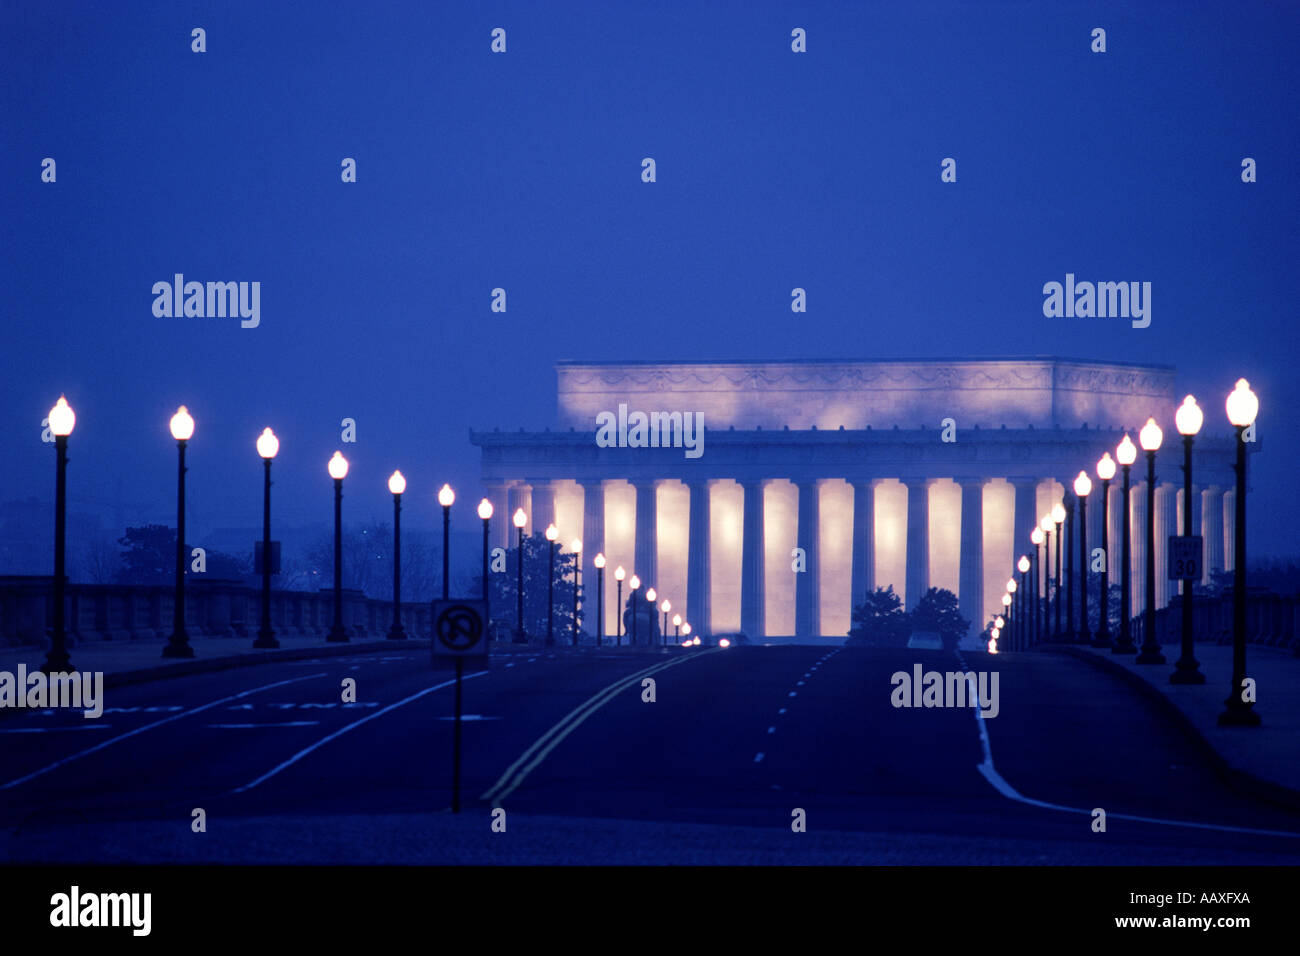 Lamplights Futter Brücke Überführung zum Lincoln Memorial in Washington D.C. nachts Stockfoto